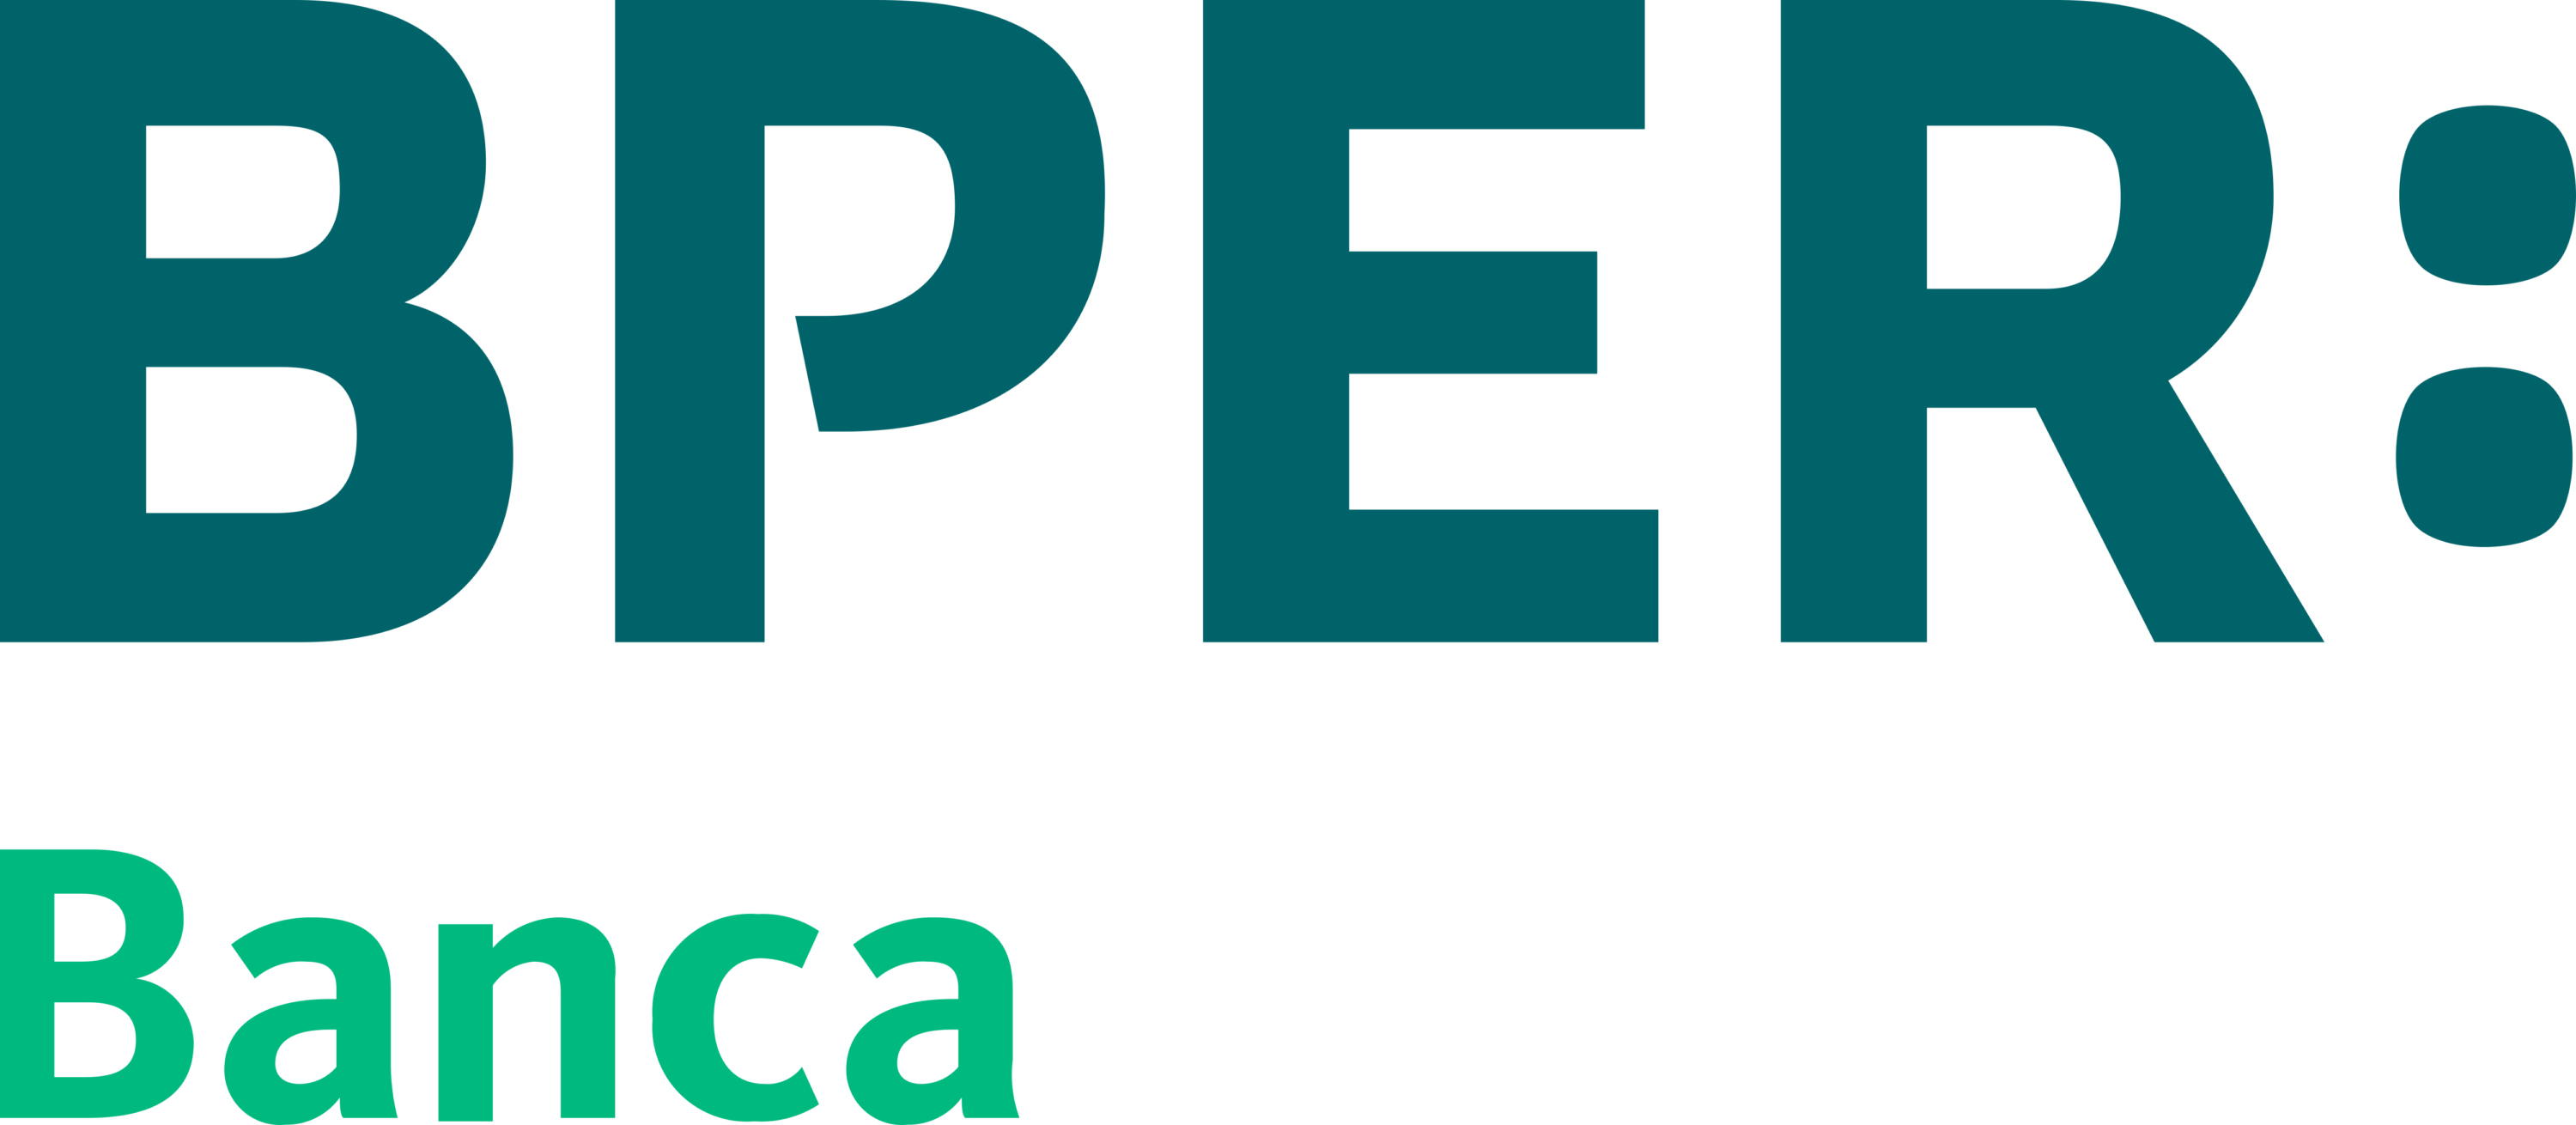 BPER Banca Logo